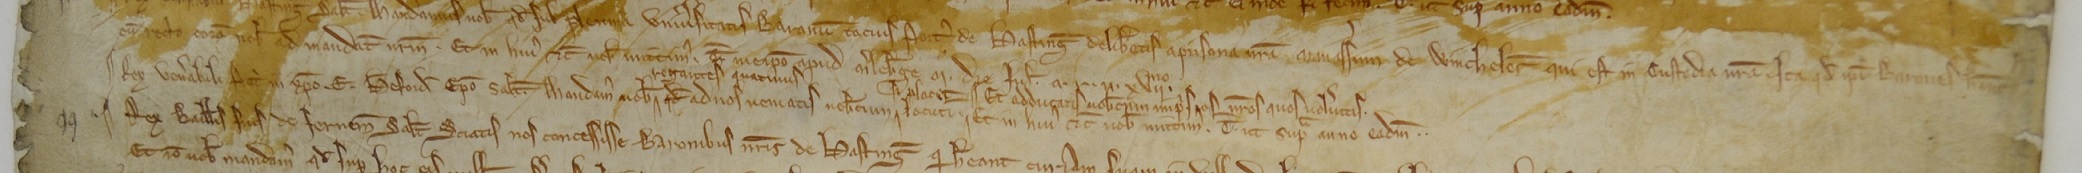 Giles de Braose letter